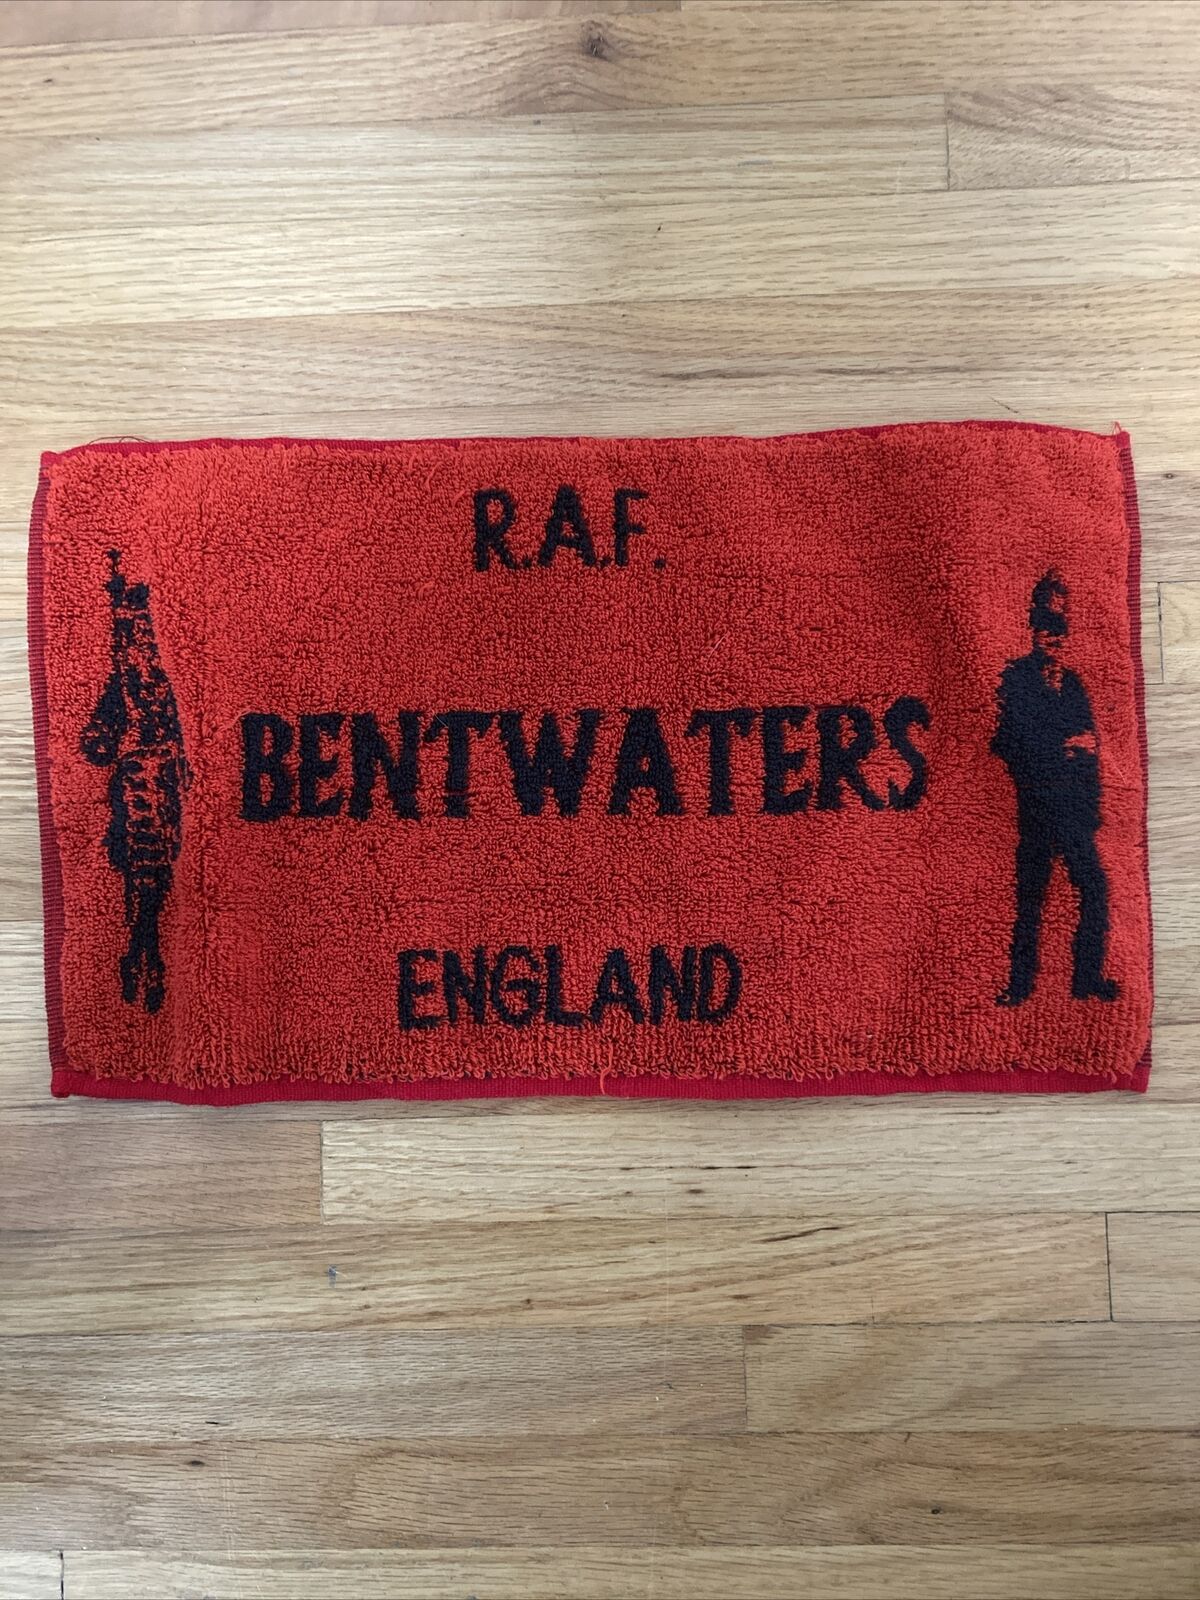 Rare Vintage RAF Bentwaters England Bar Towel